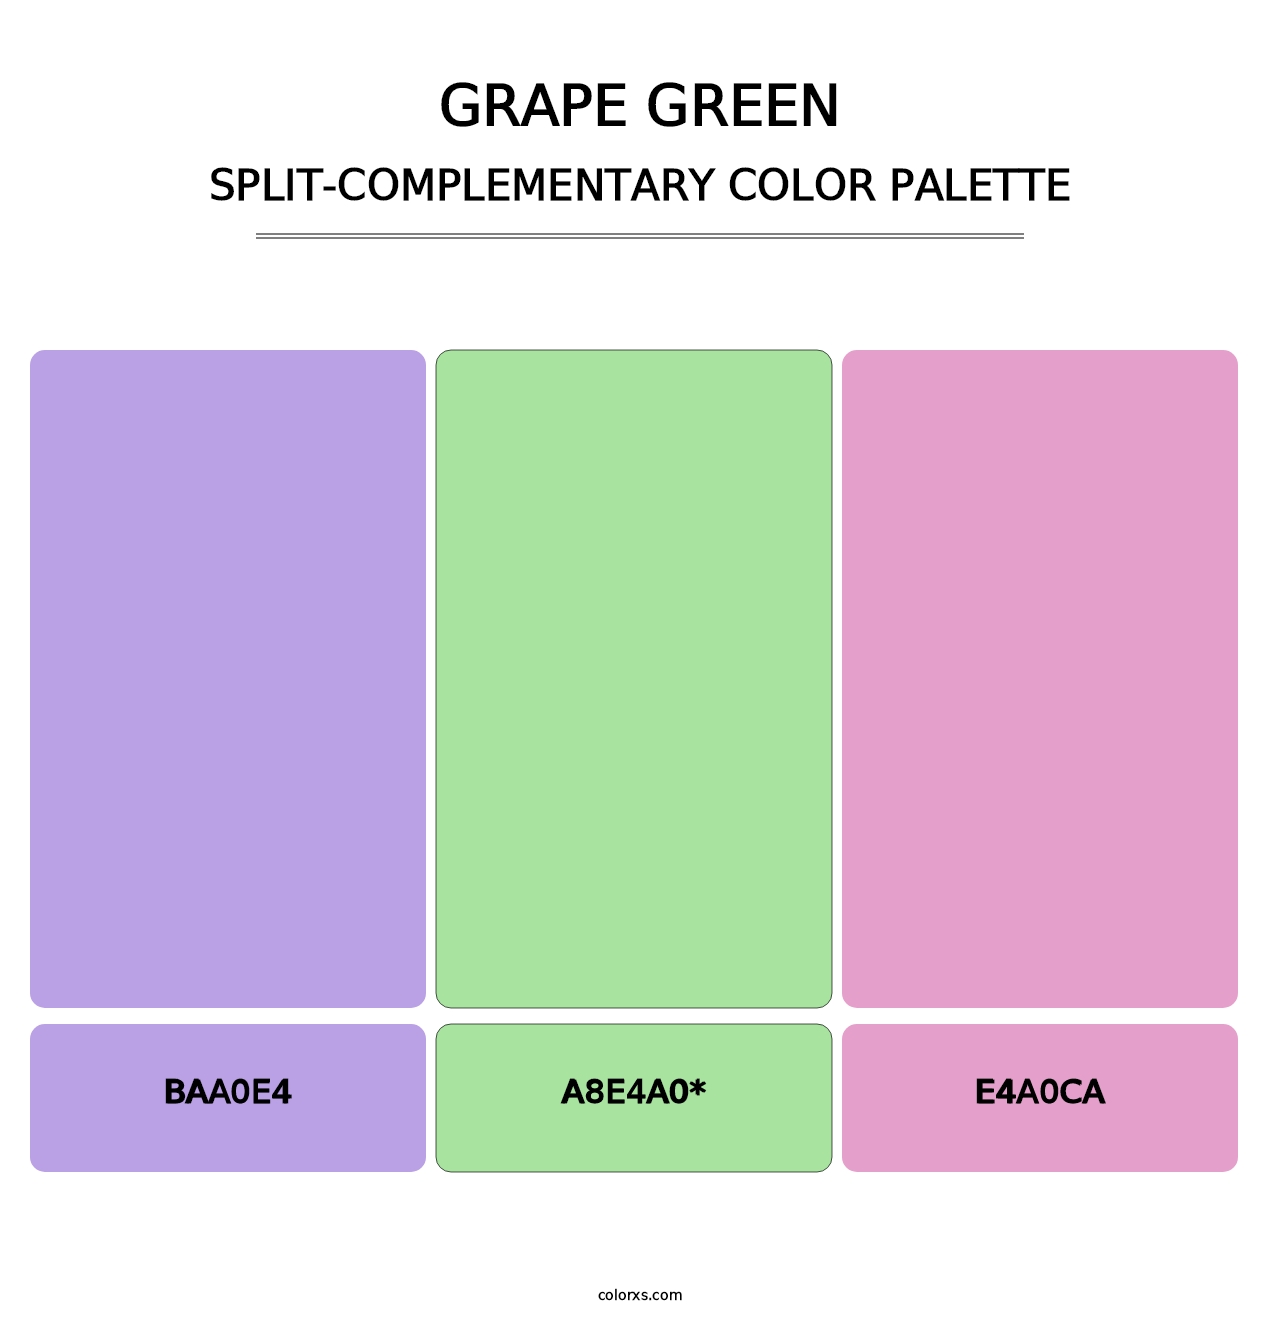 Grape Green - Split-Complementary Color Palette